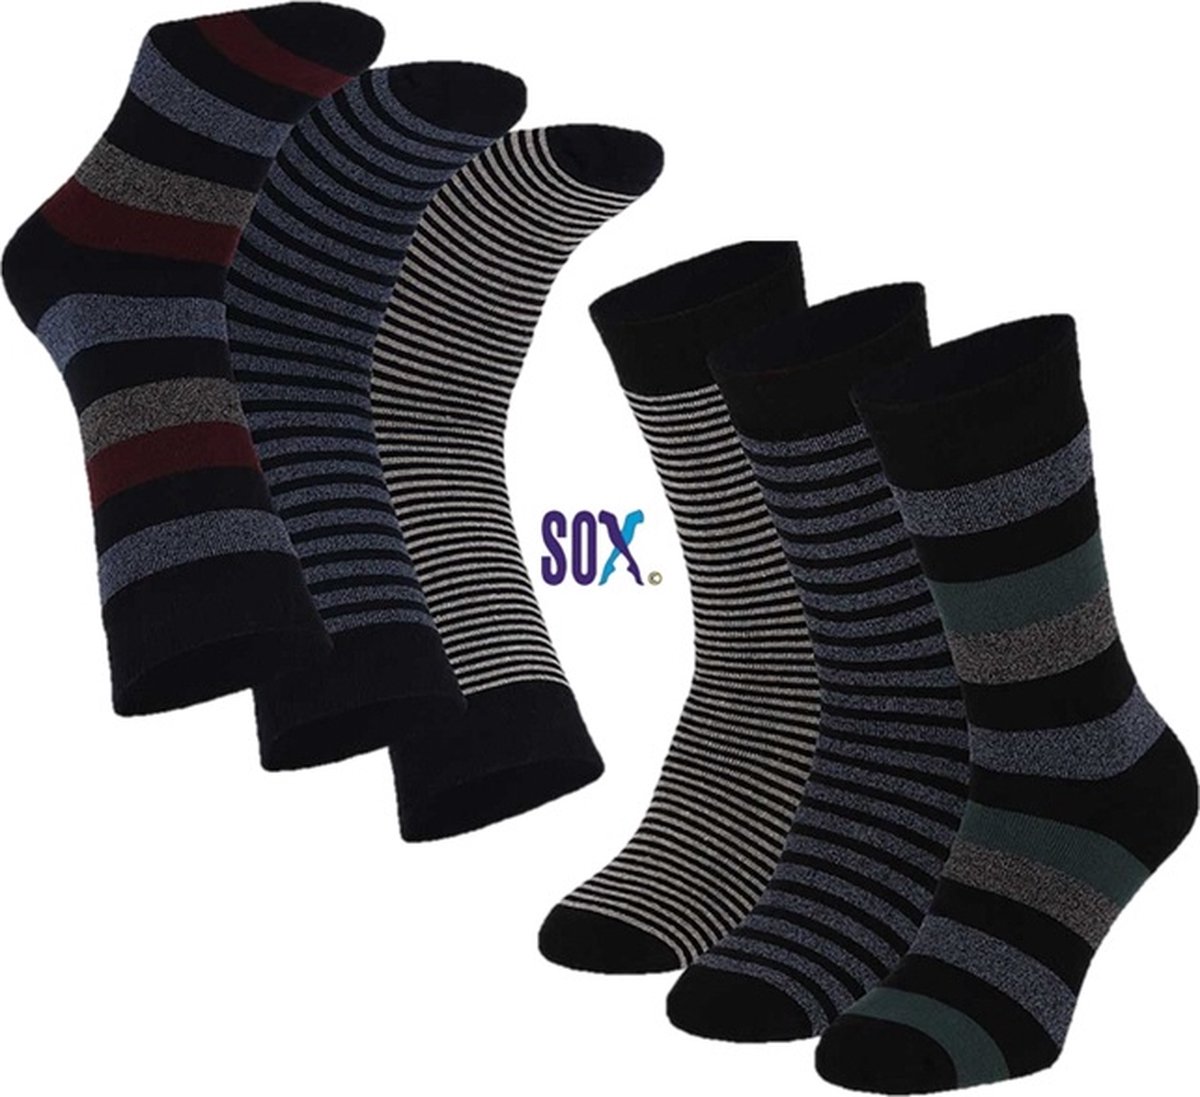 SOX Thermische Full Terry 6 PACK Unisex sokken 37/42 Fantasie streep assorti Marine mix en Zwart mix Sterk en Naadloos